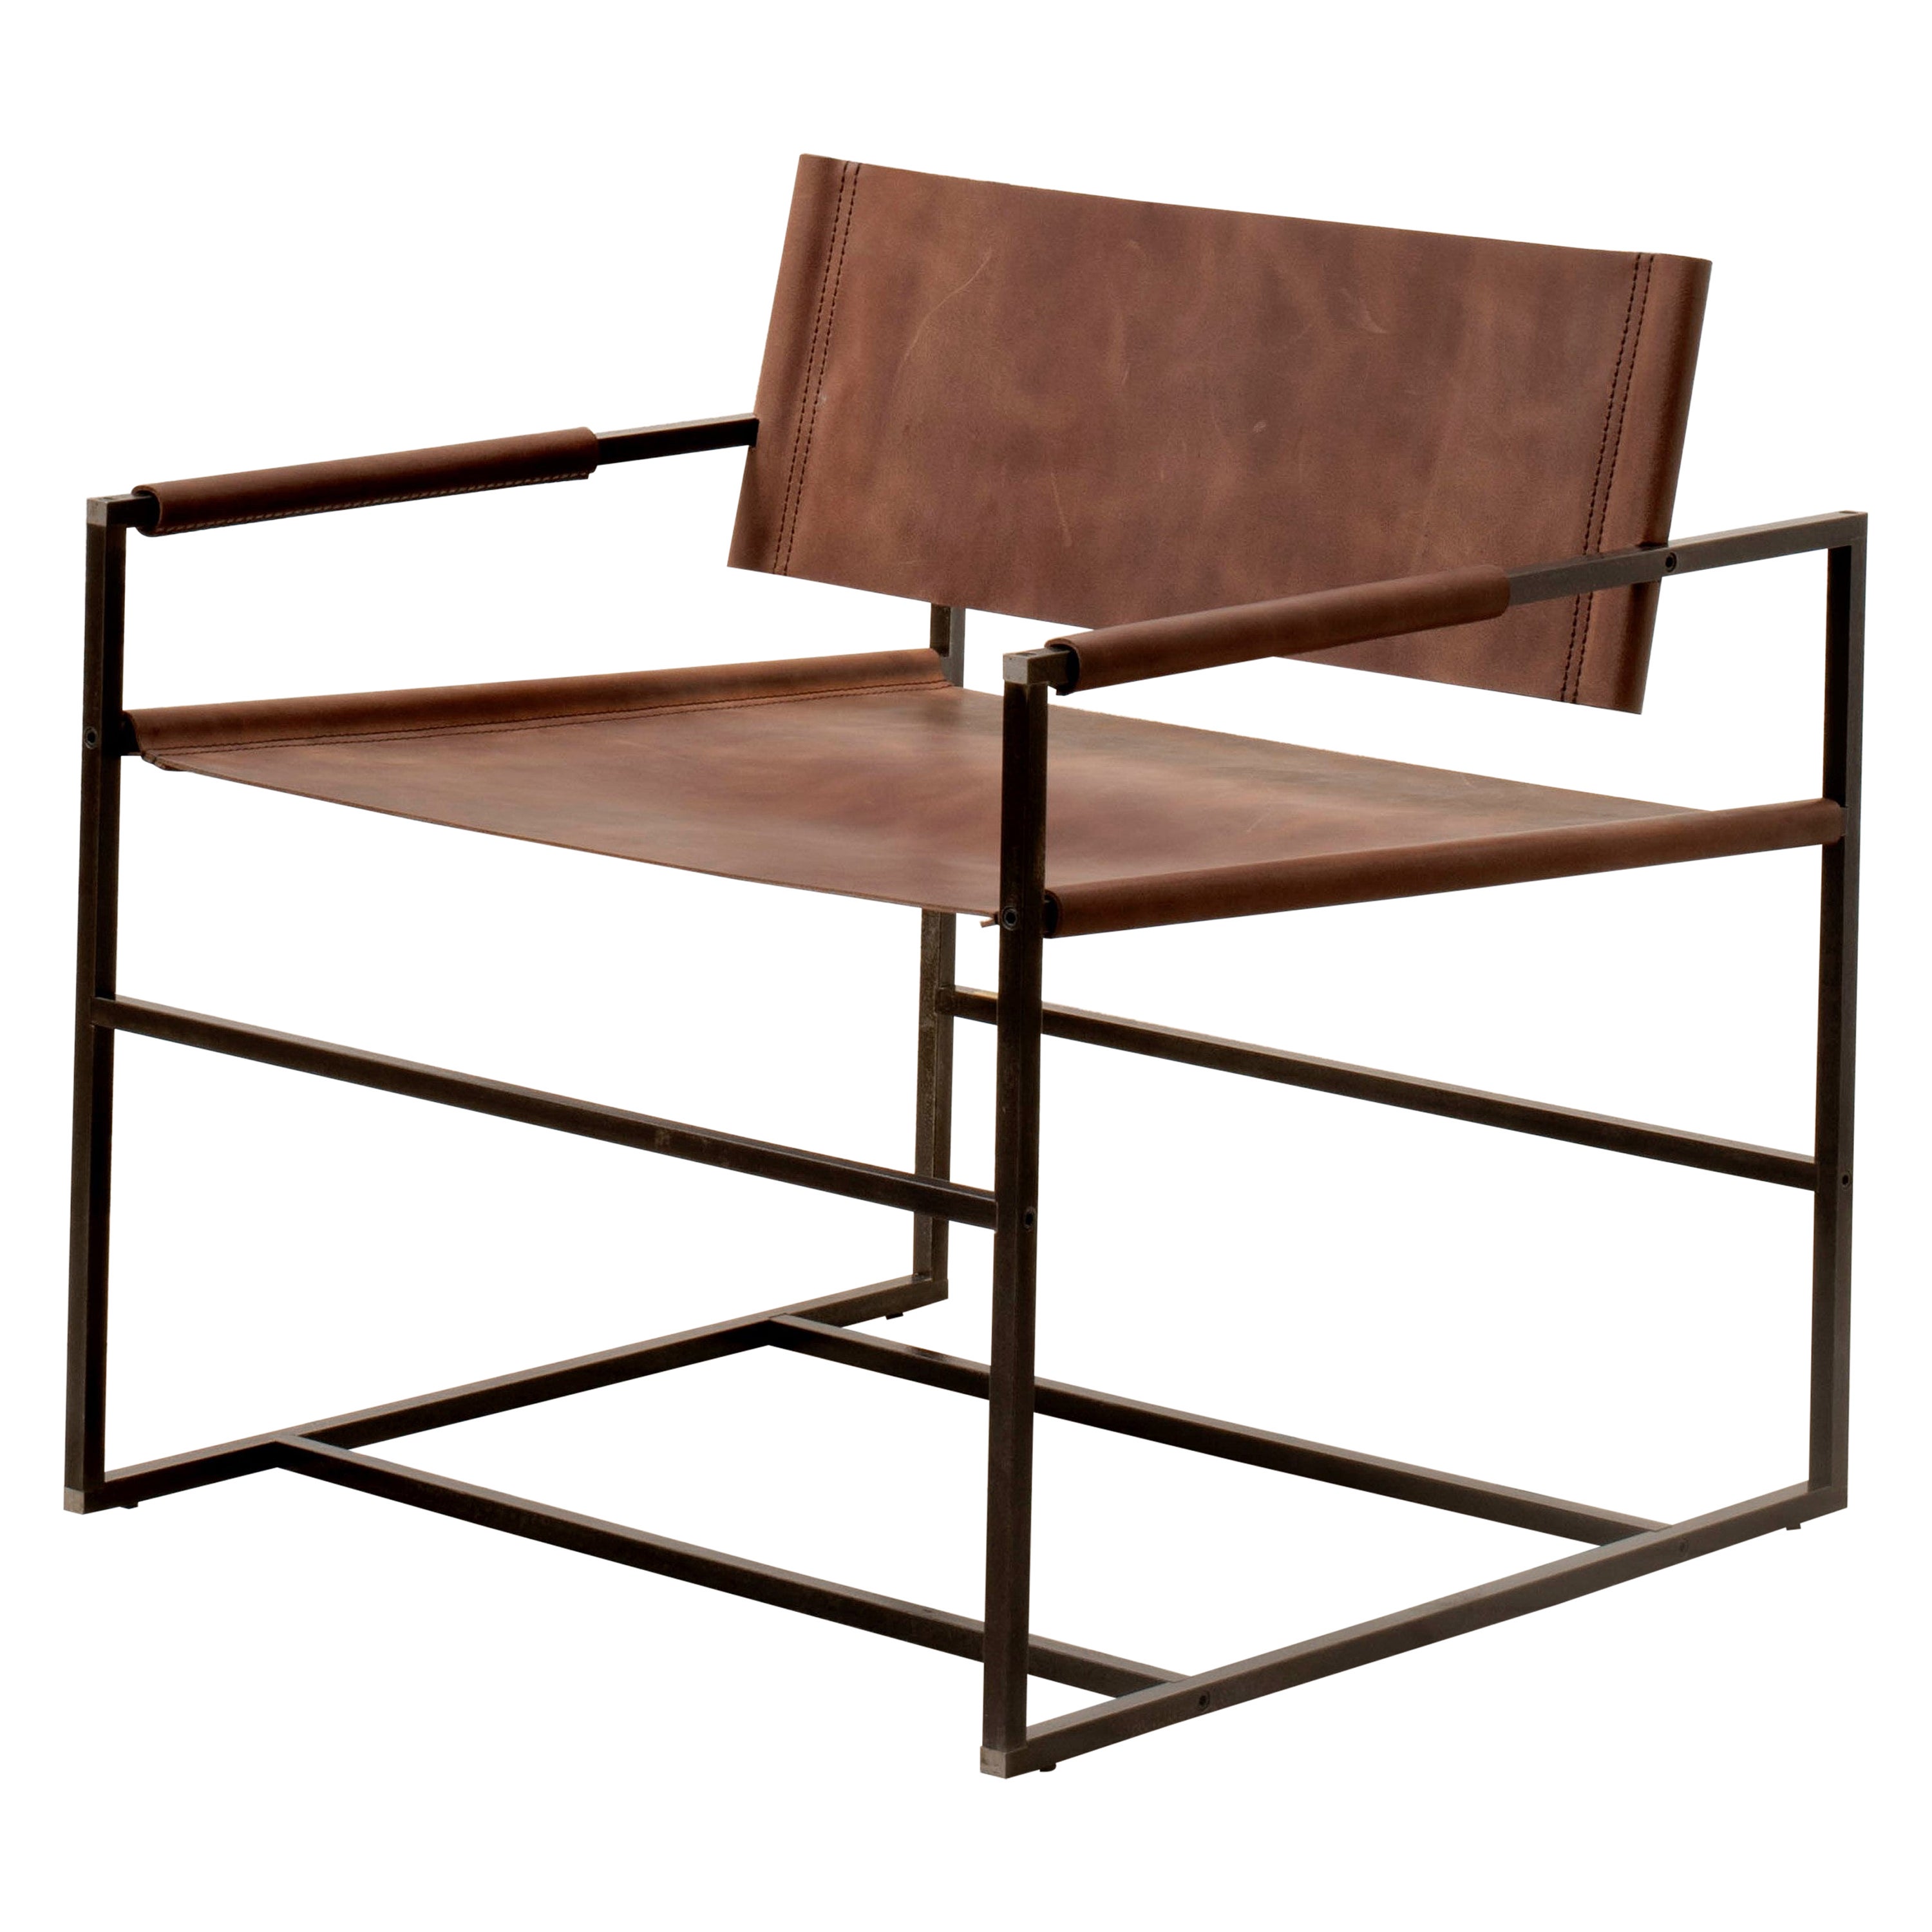  Armchair_01 ֻ minimalist armchair, handmade from Leather and steel. 